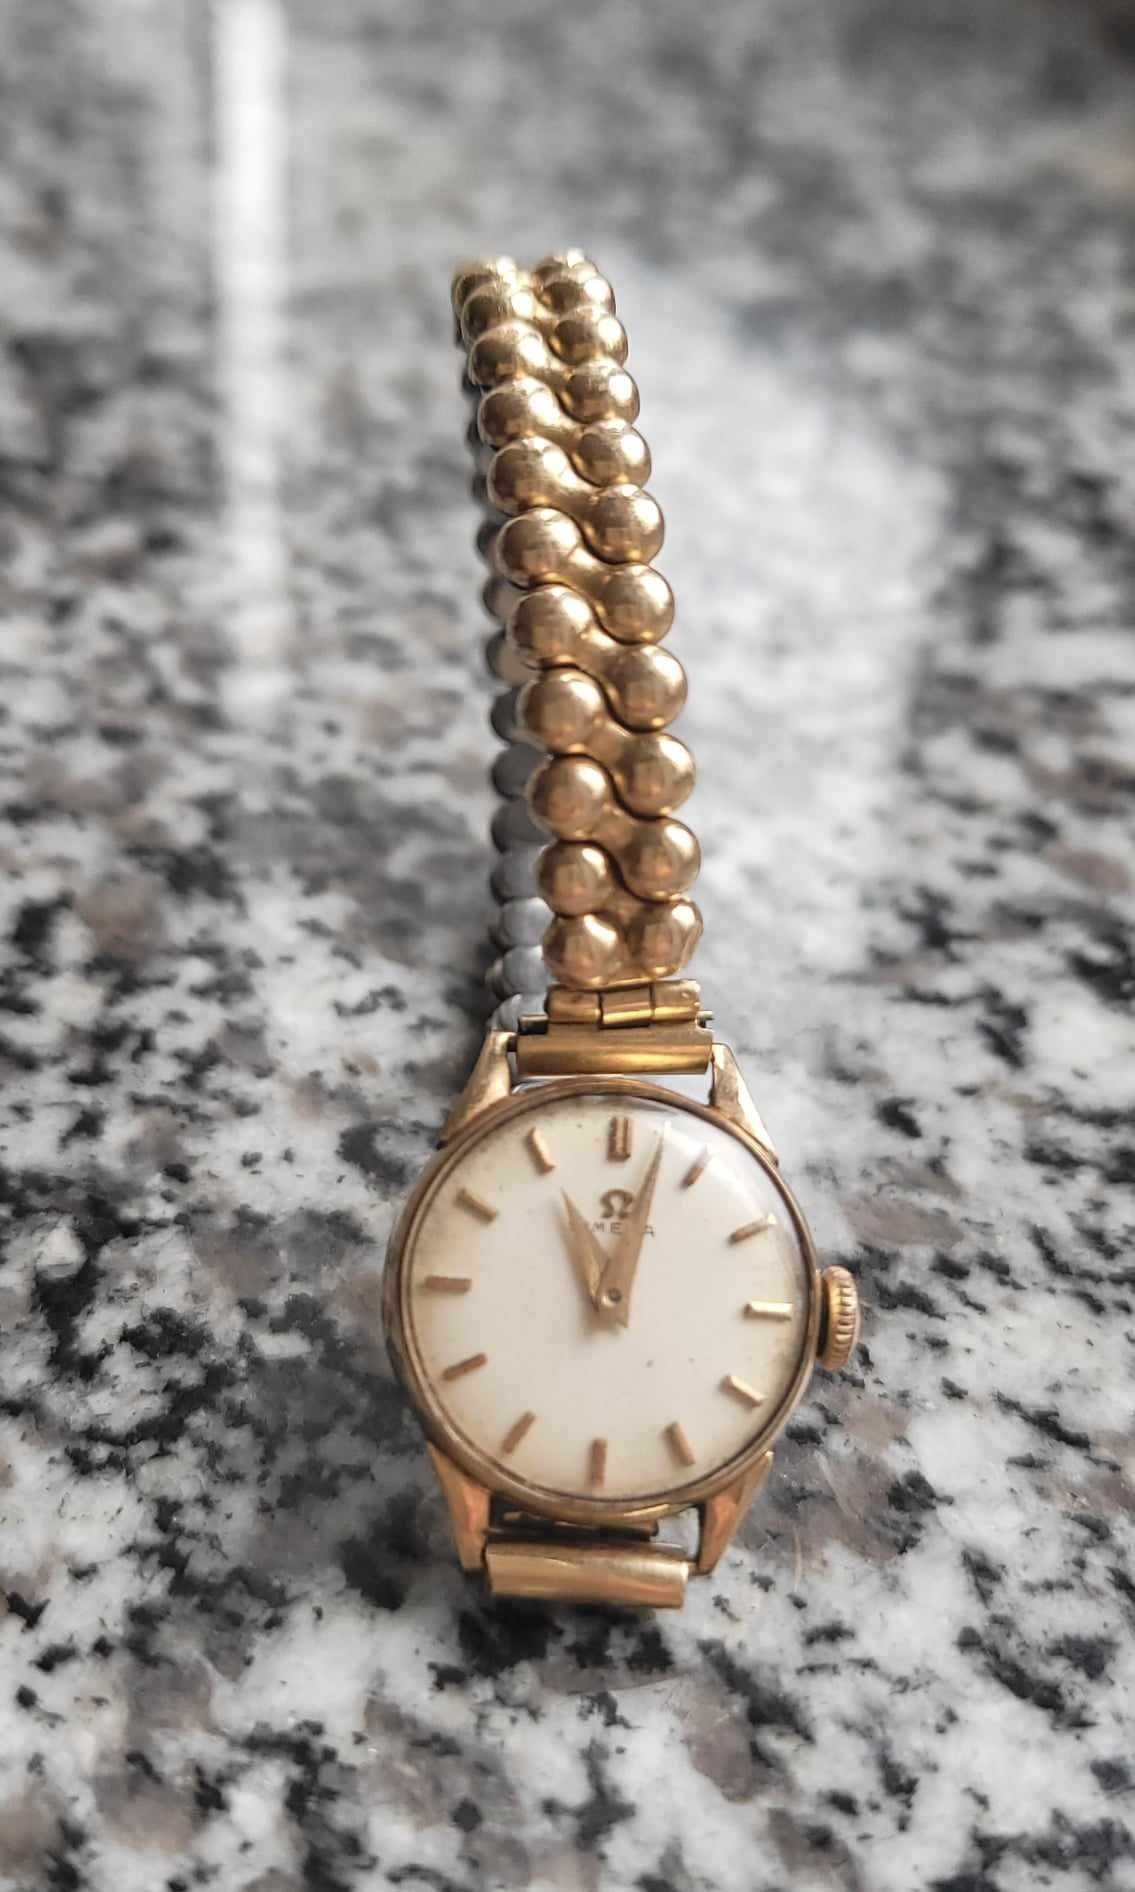 Zegarek OMEGA złoty, damski